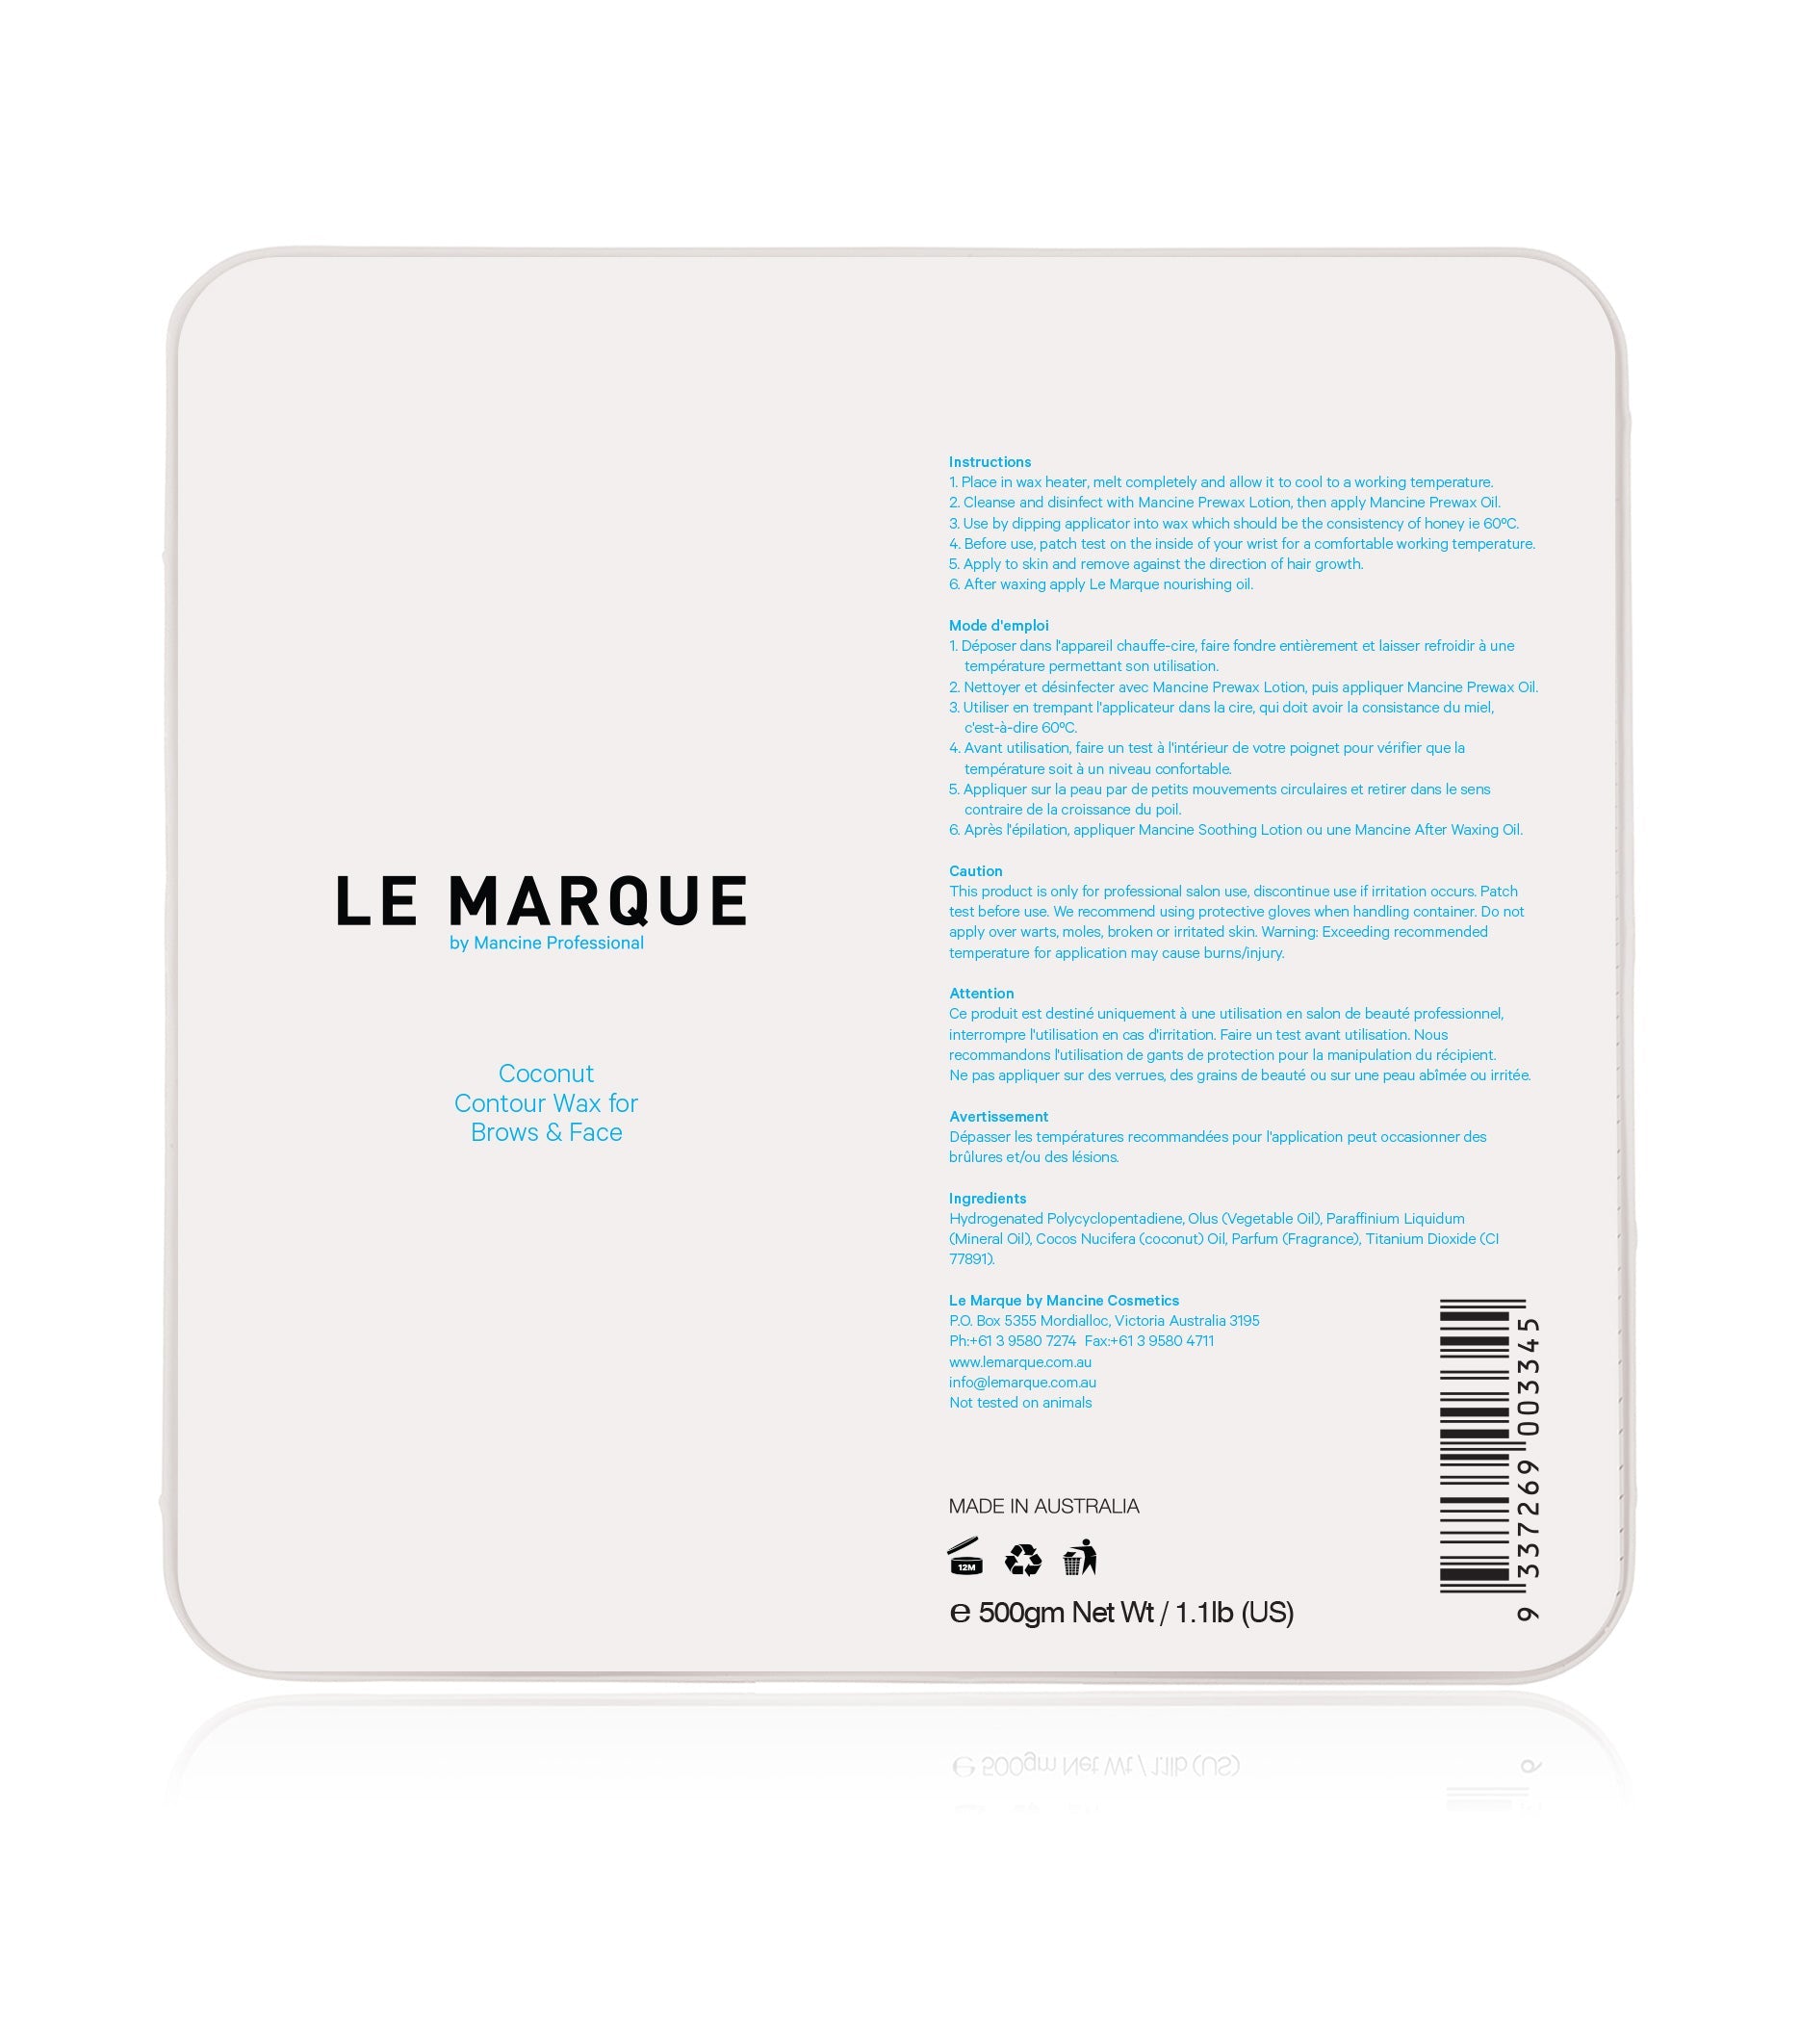 Le Marque Coconut Contour Wax for Brows & Face 500g